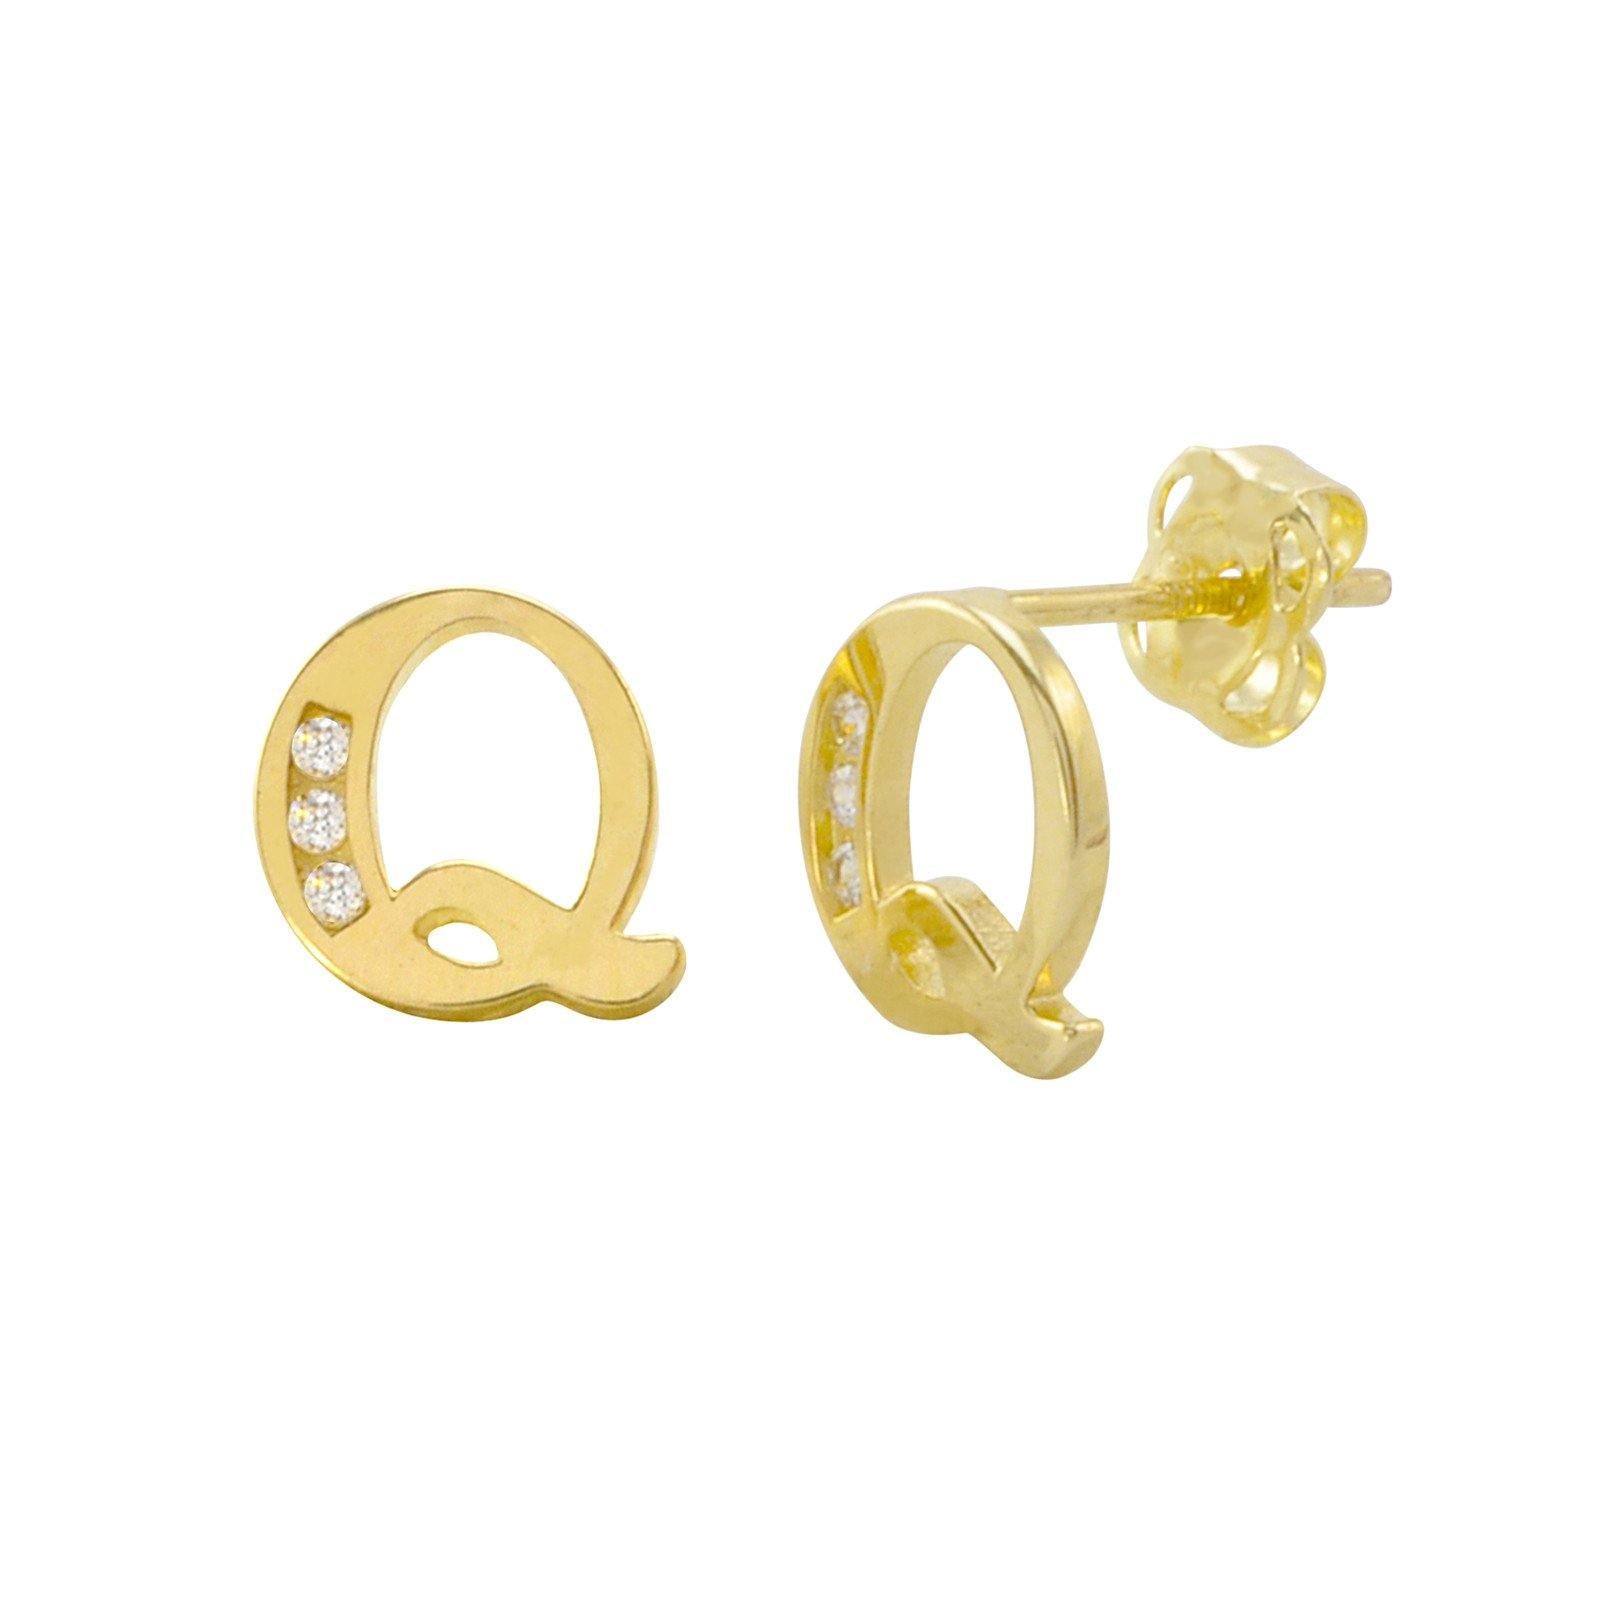 10k Yellow Gold Initial Stud Earrings Letter Q | Jewelryland.com